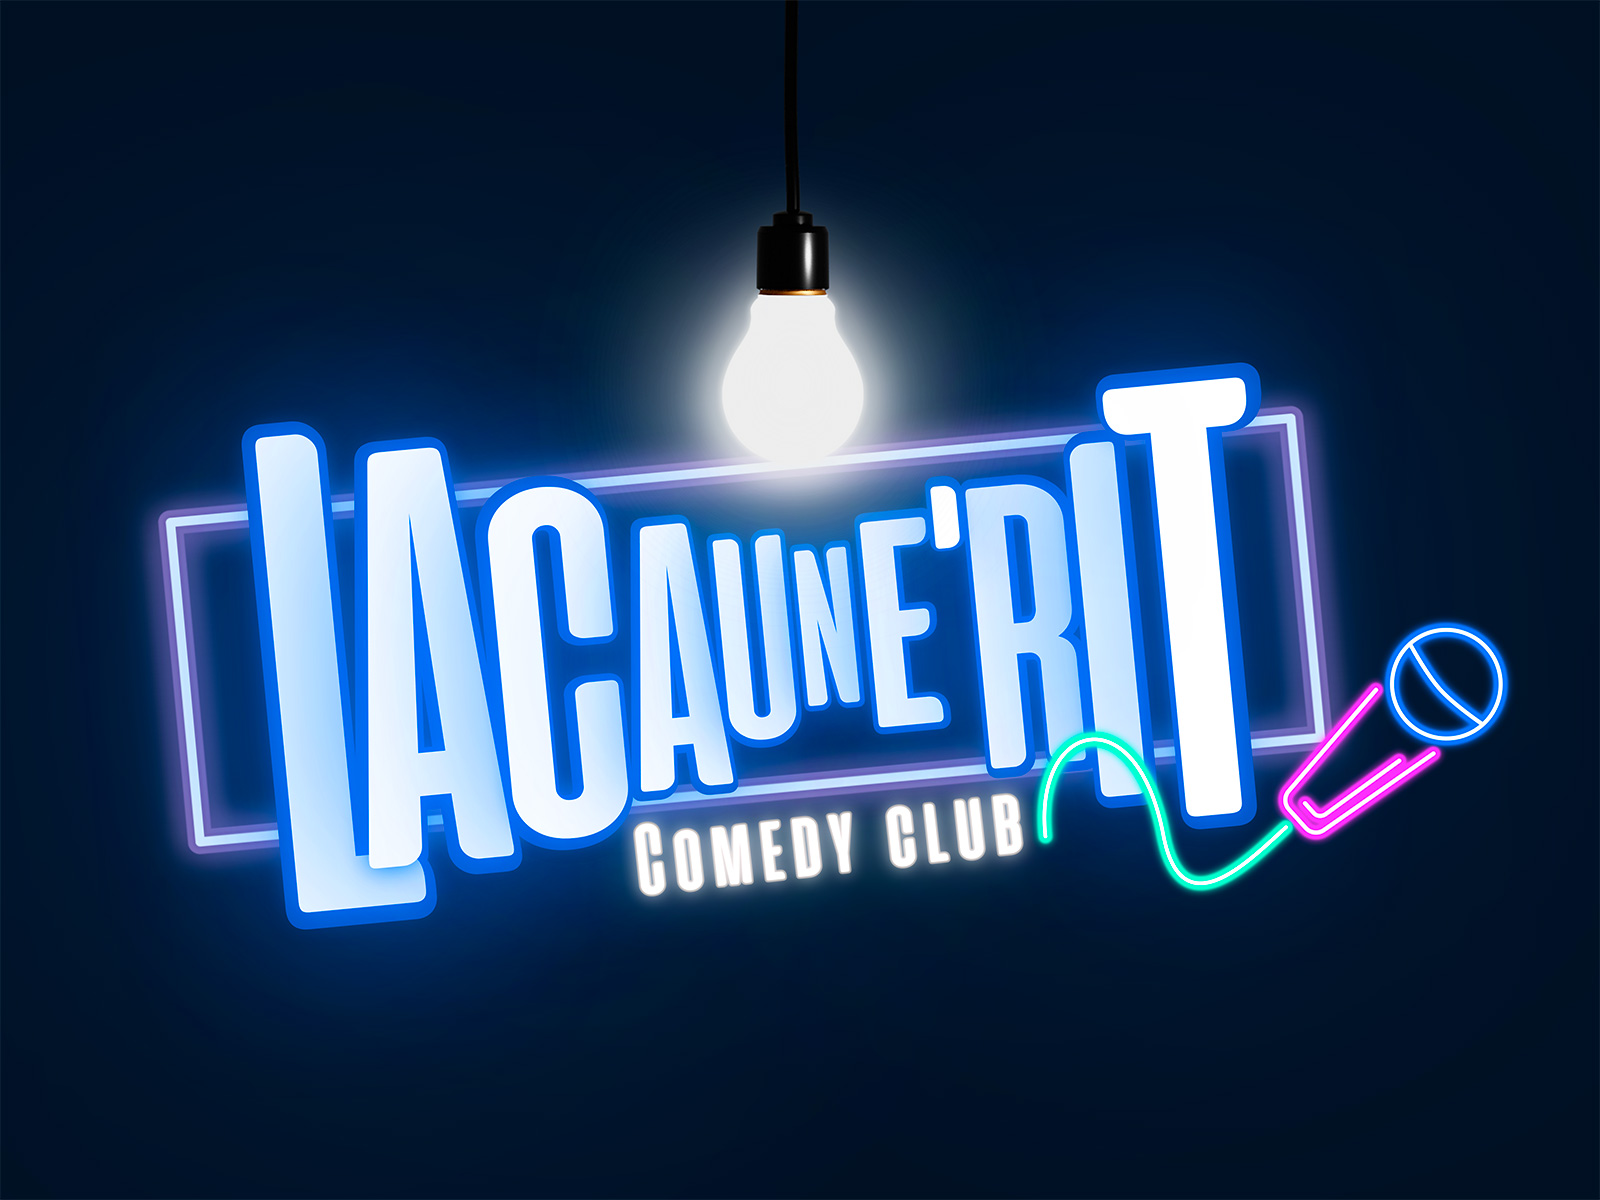 Lacaune'riT Comedy Club